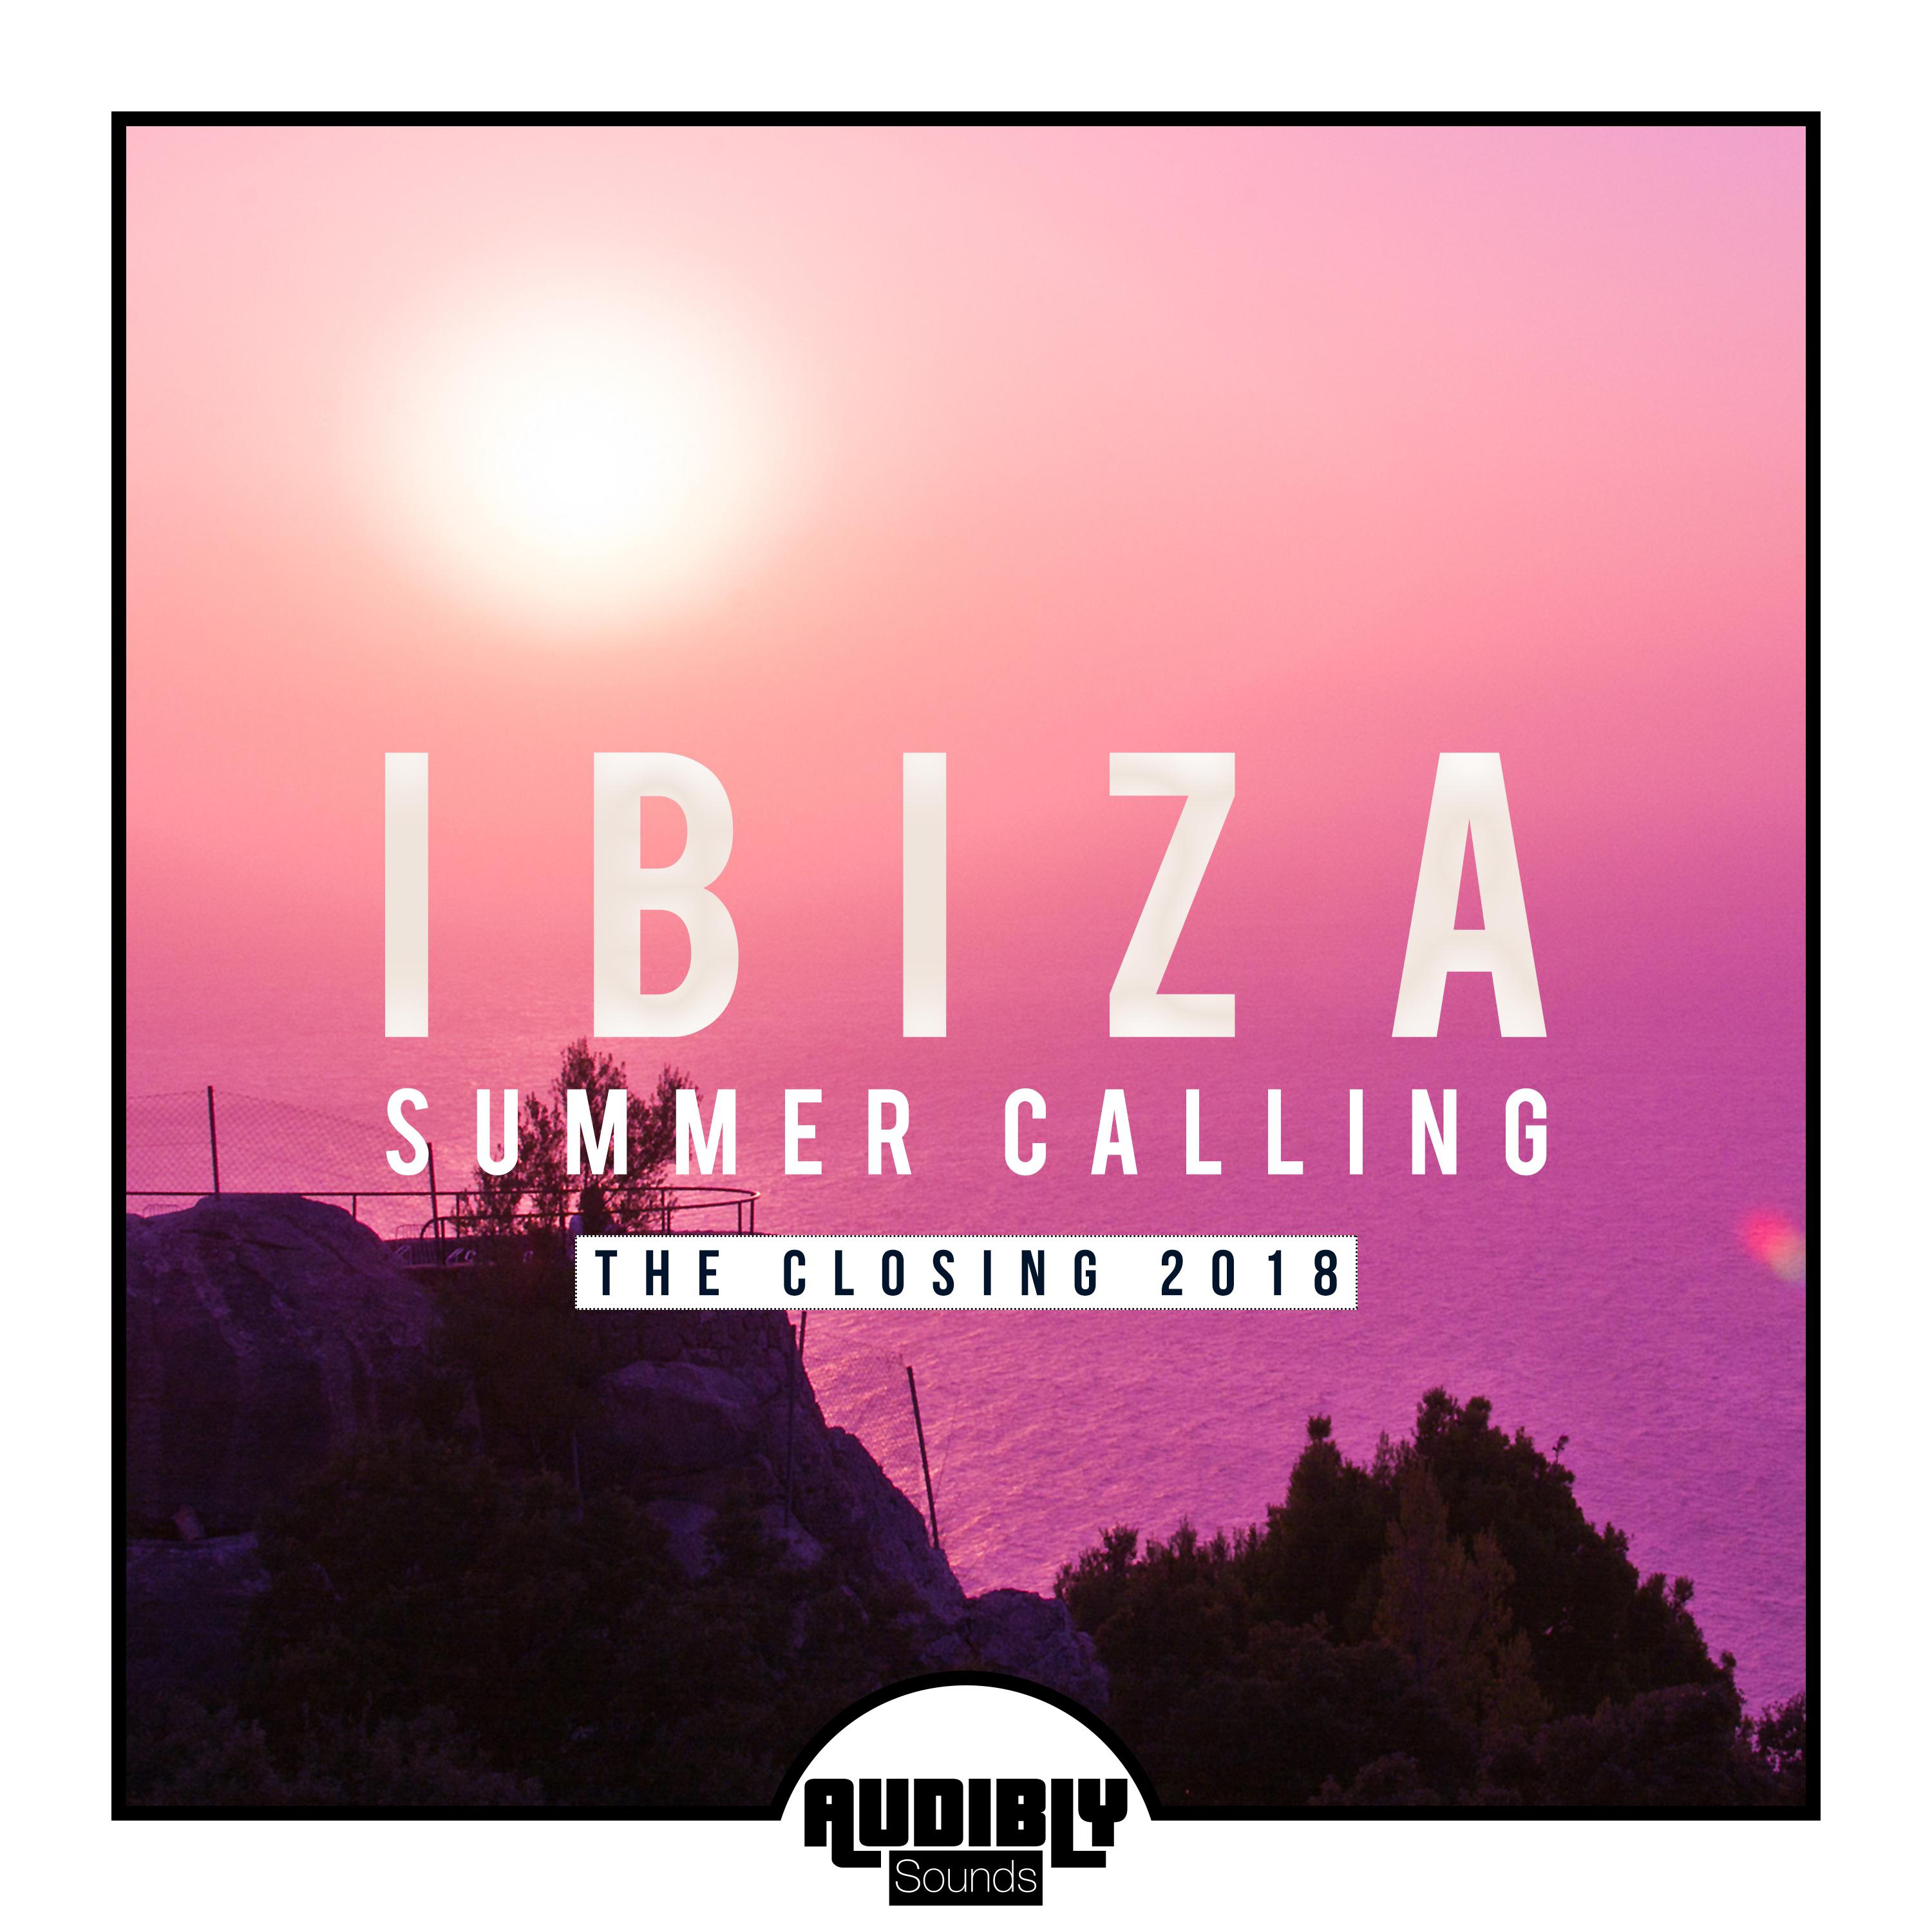 Ibiza Summer Calling - The Closing 2018